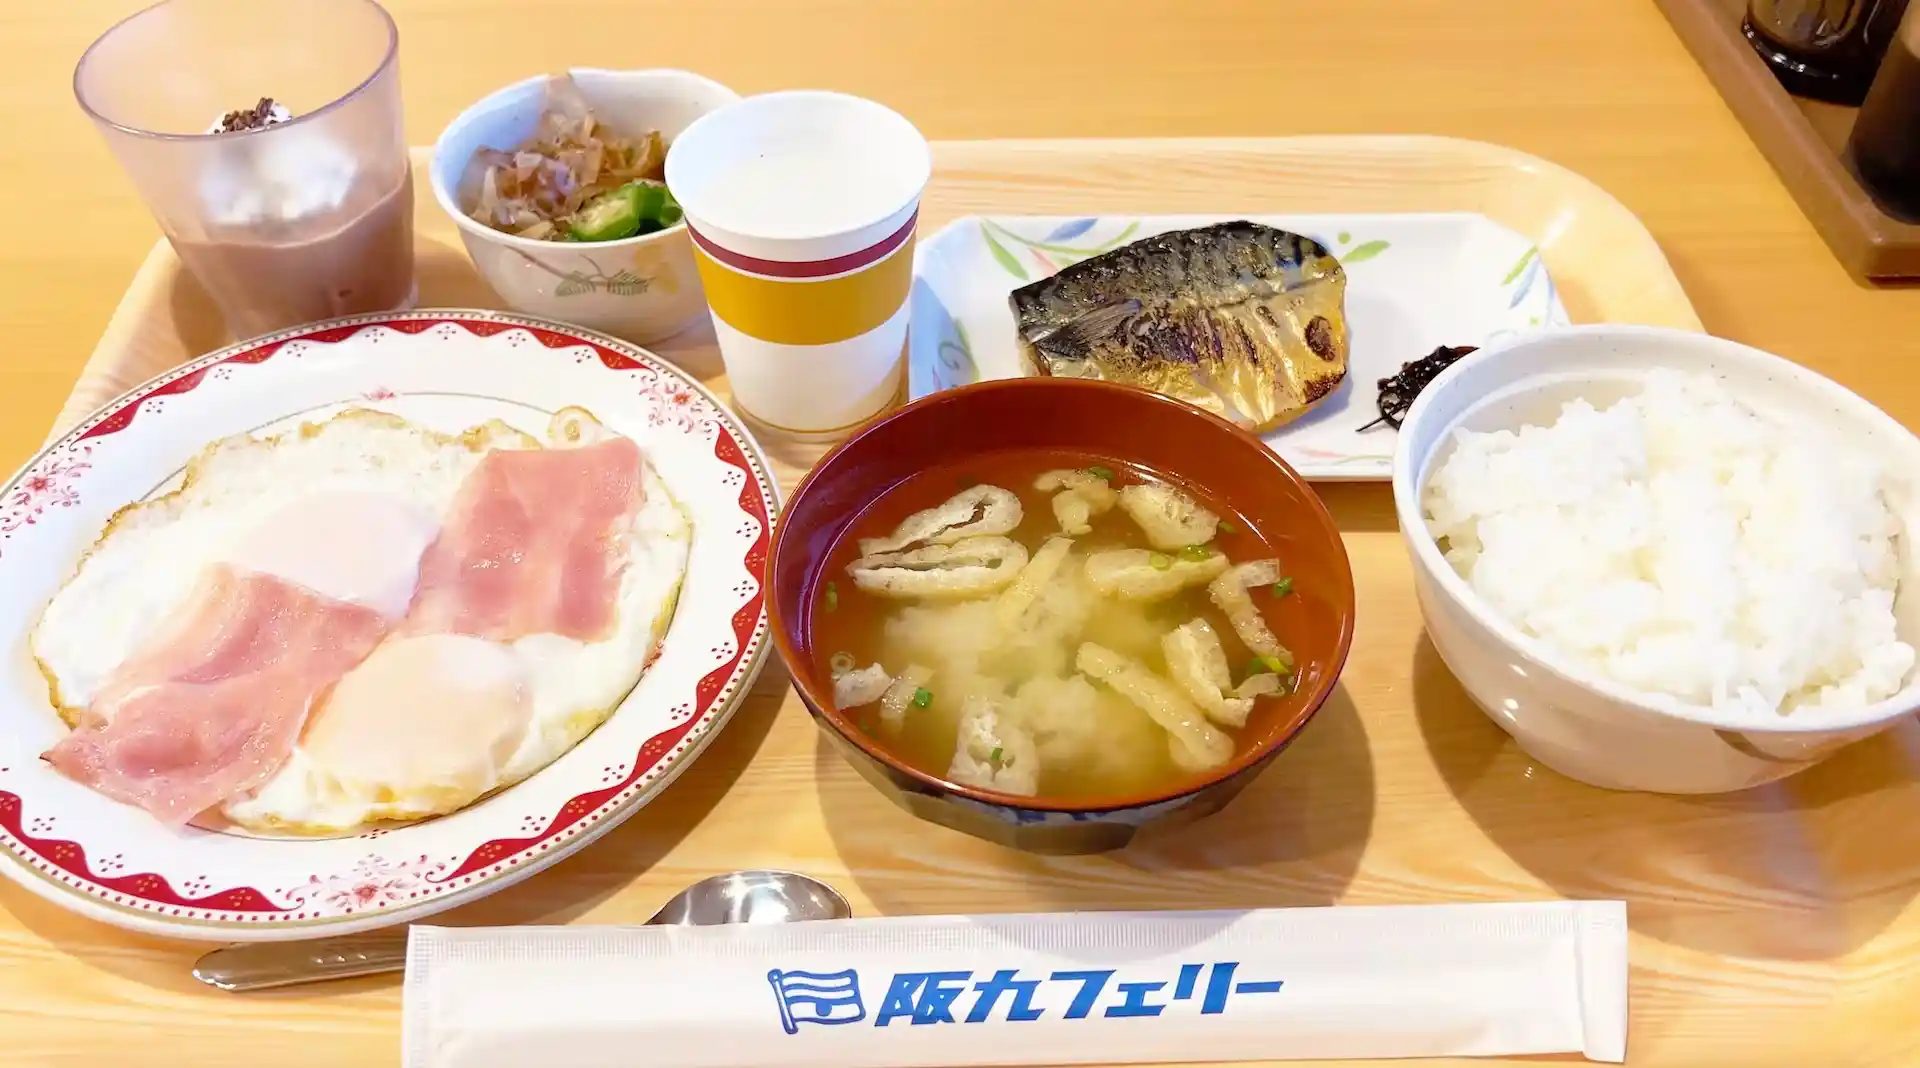 Plate of breakfast offerings at the Hankyu Ferry SETTSU Restaurant